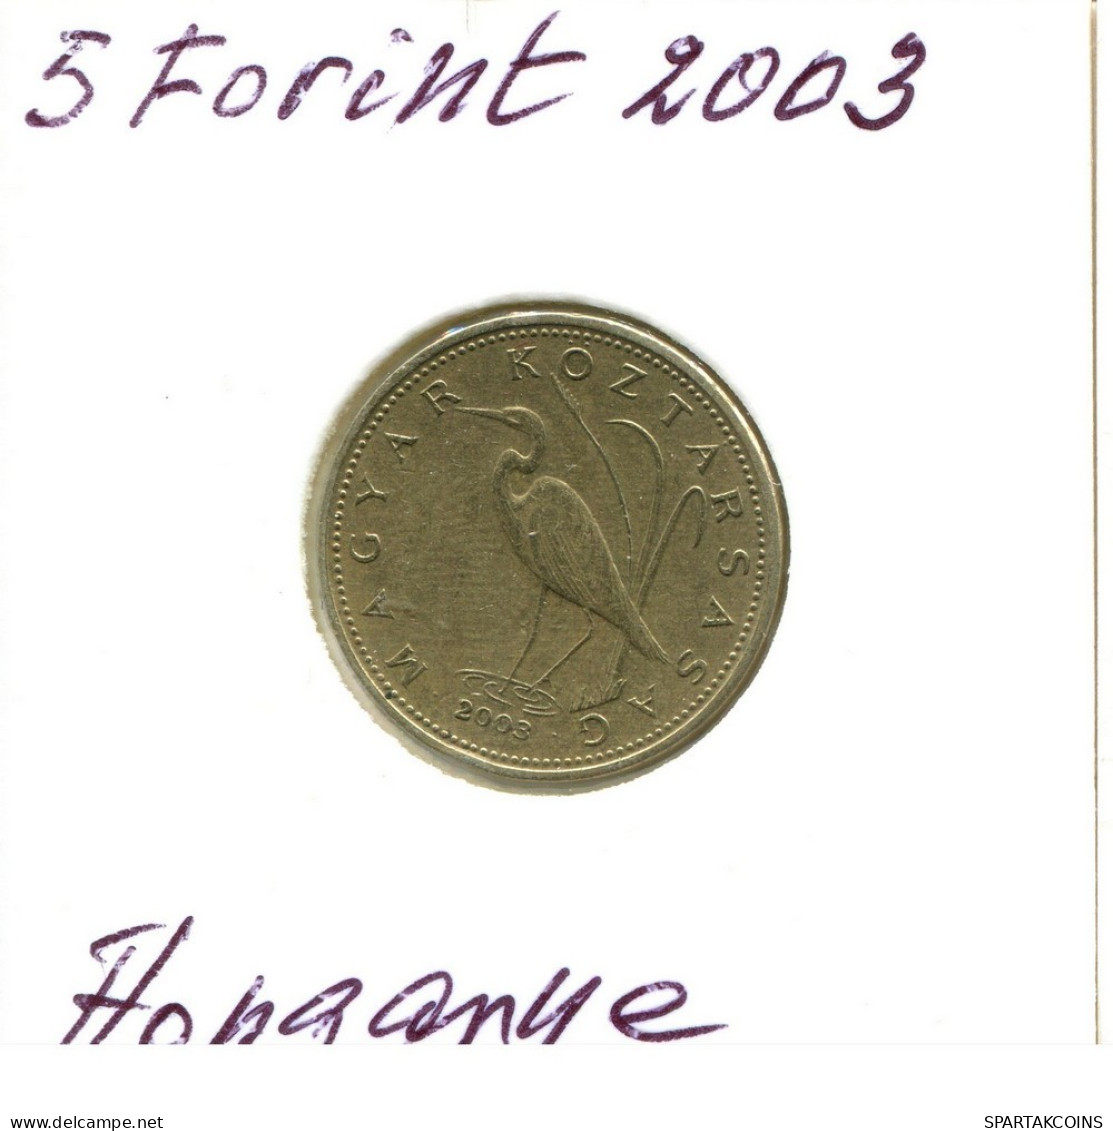 5 FORINT 2003 HUNGRÍA HUNGARY Moneda #AY516.E.A - Hungary